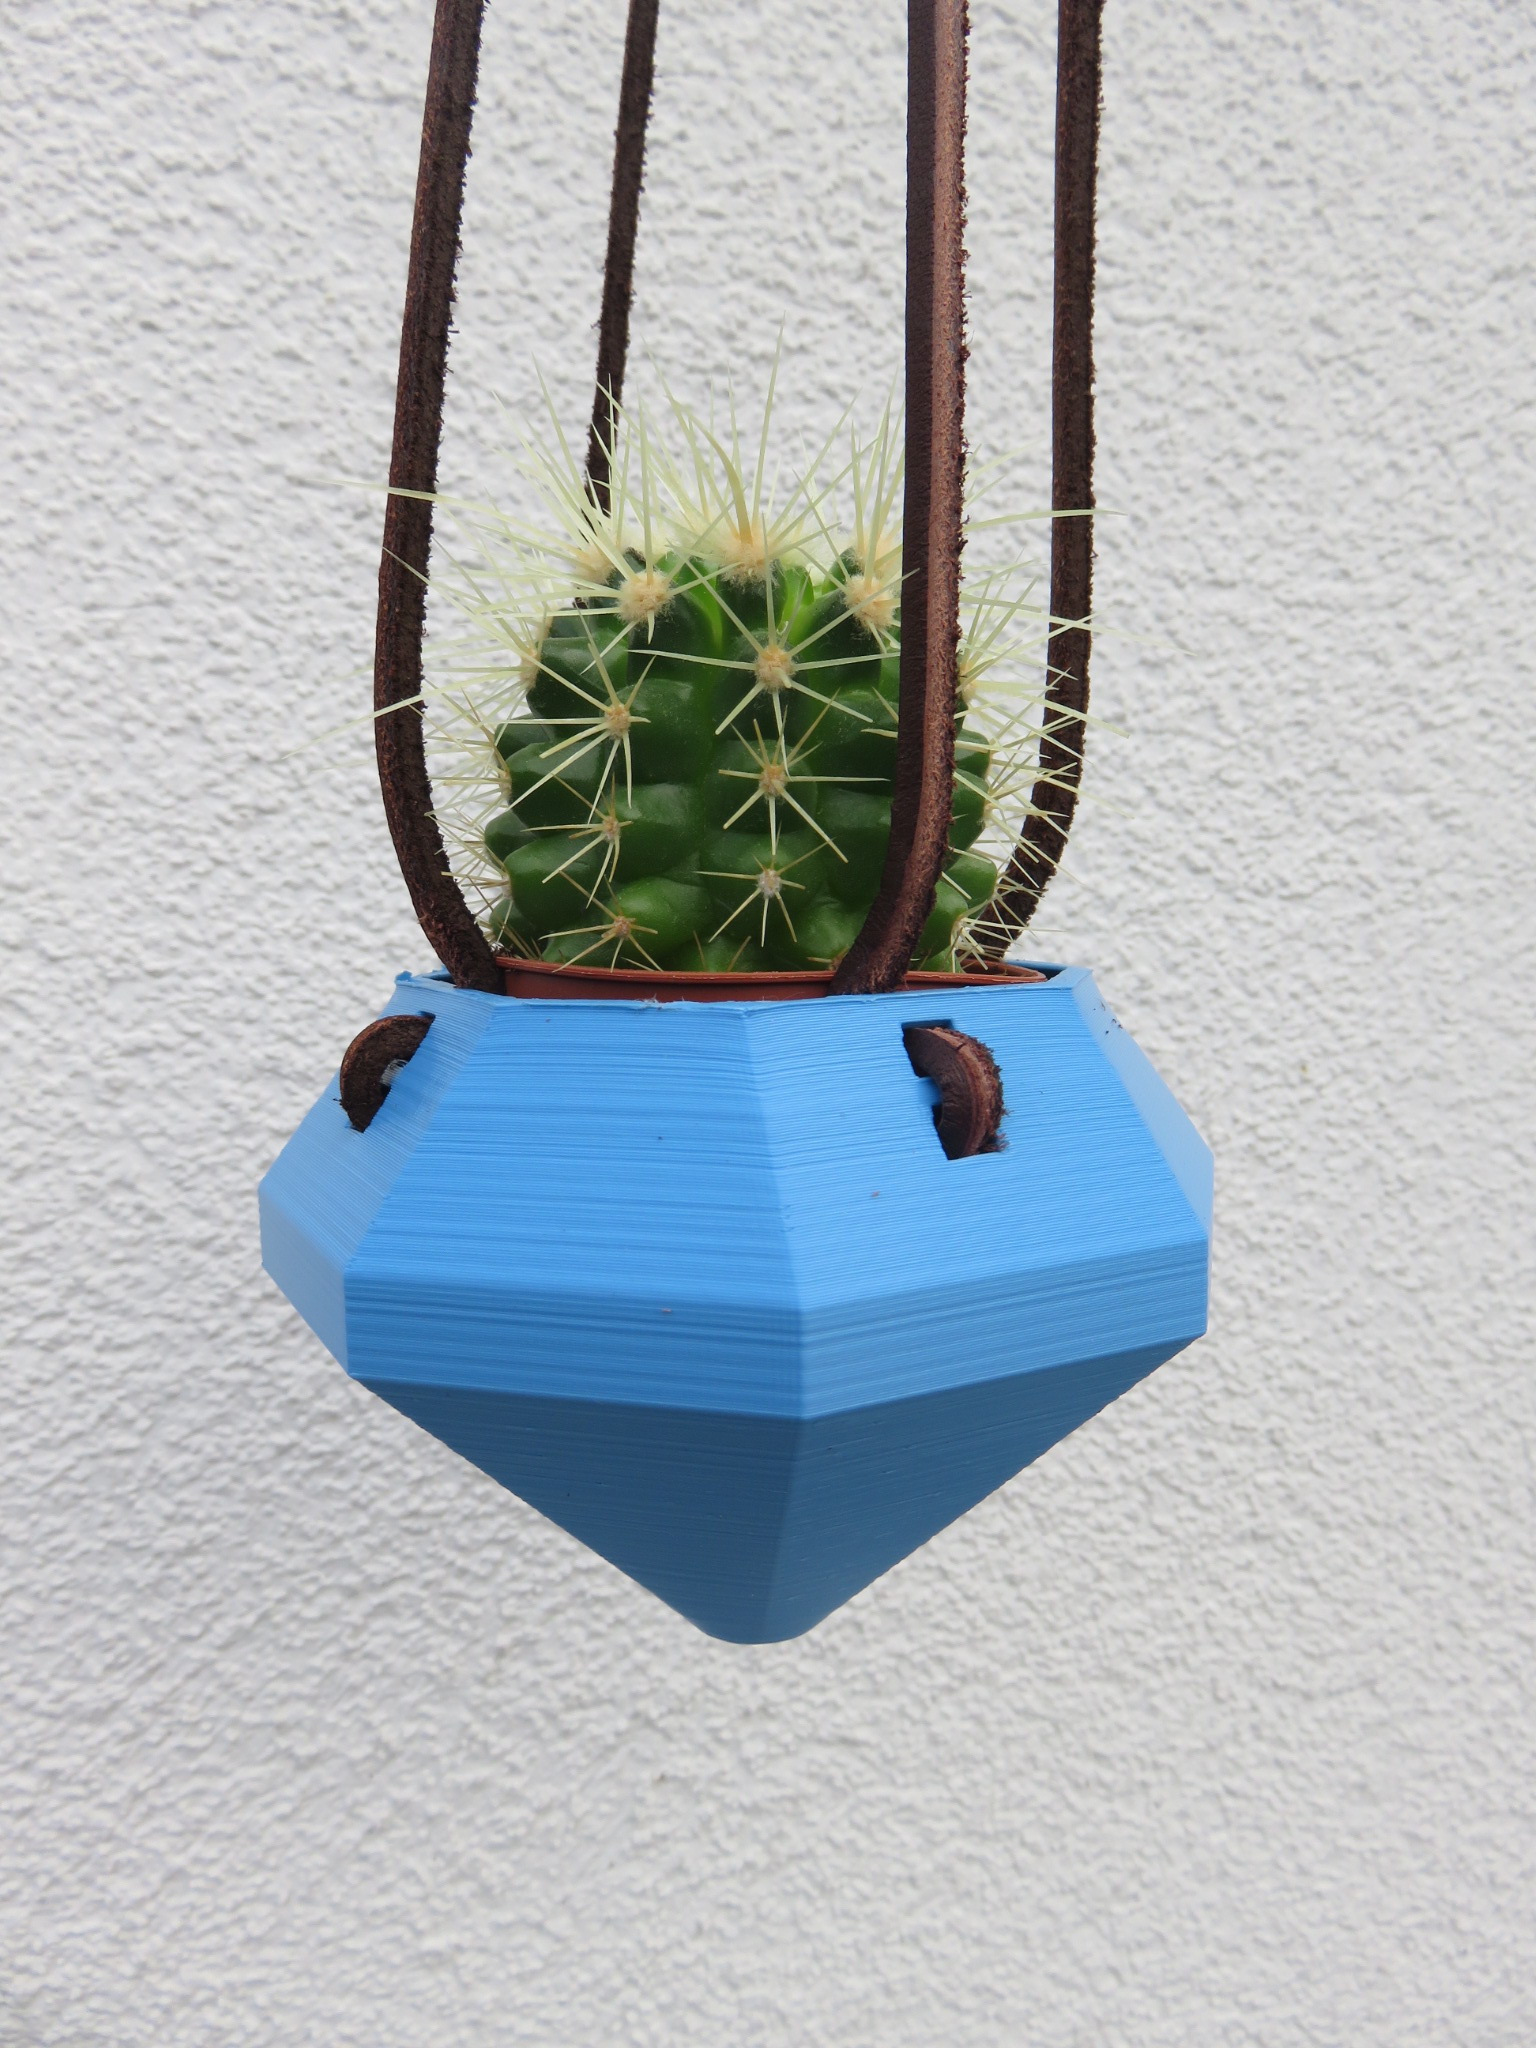 Hanging_planter_1.png Download free STL file Mini hanging planter • 3D printer model, Maker_at_heart